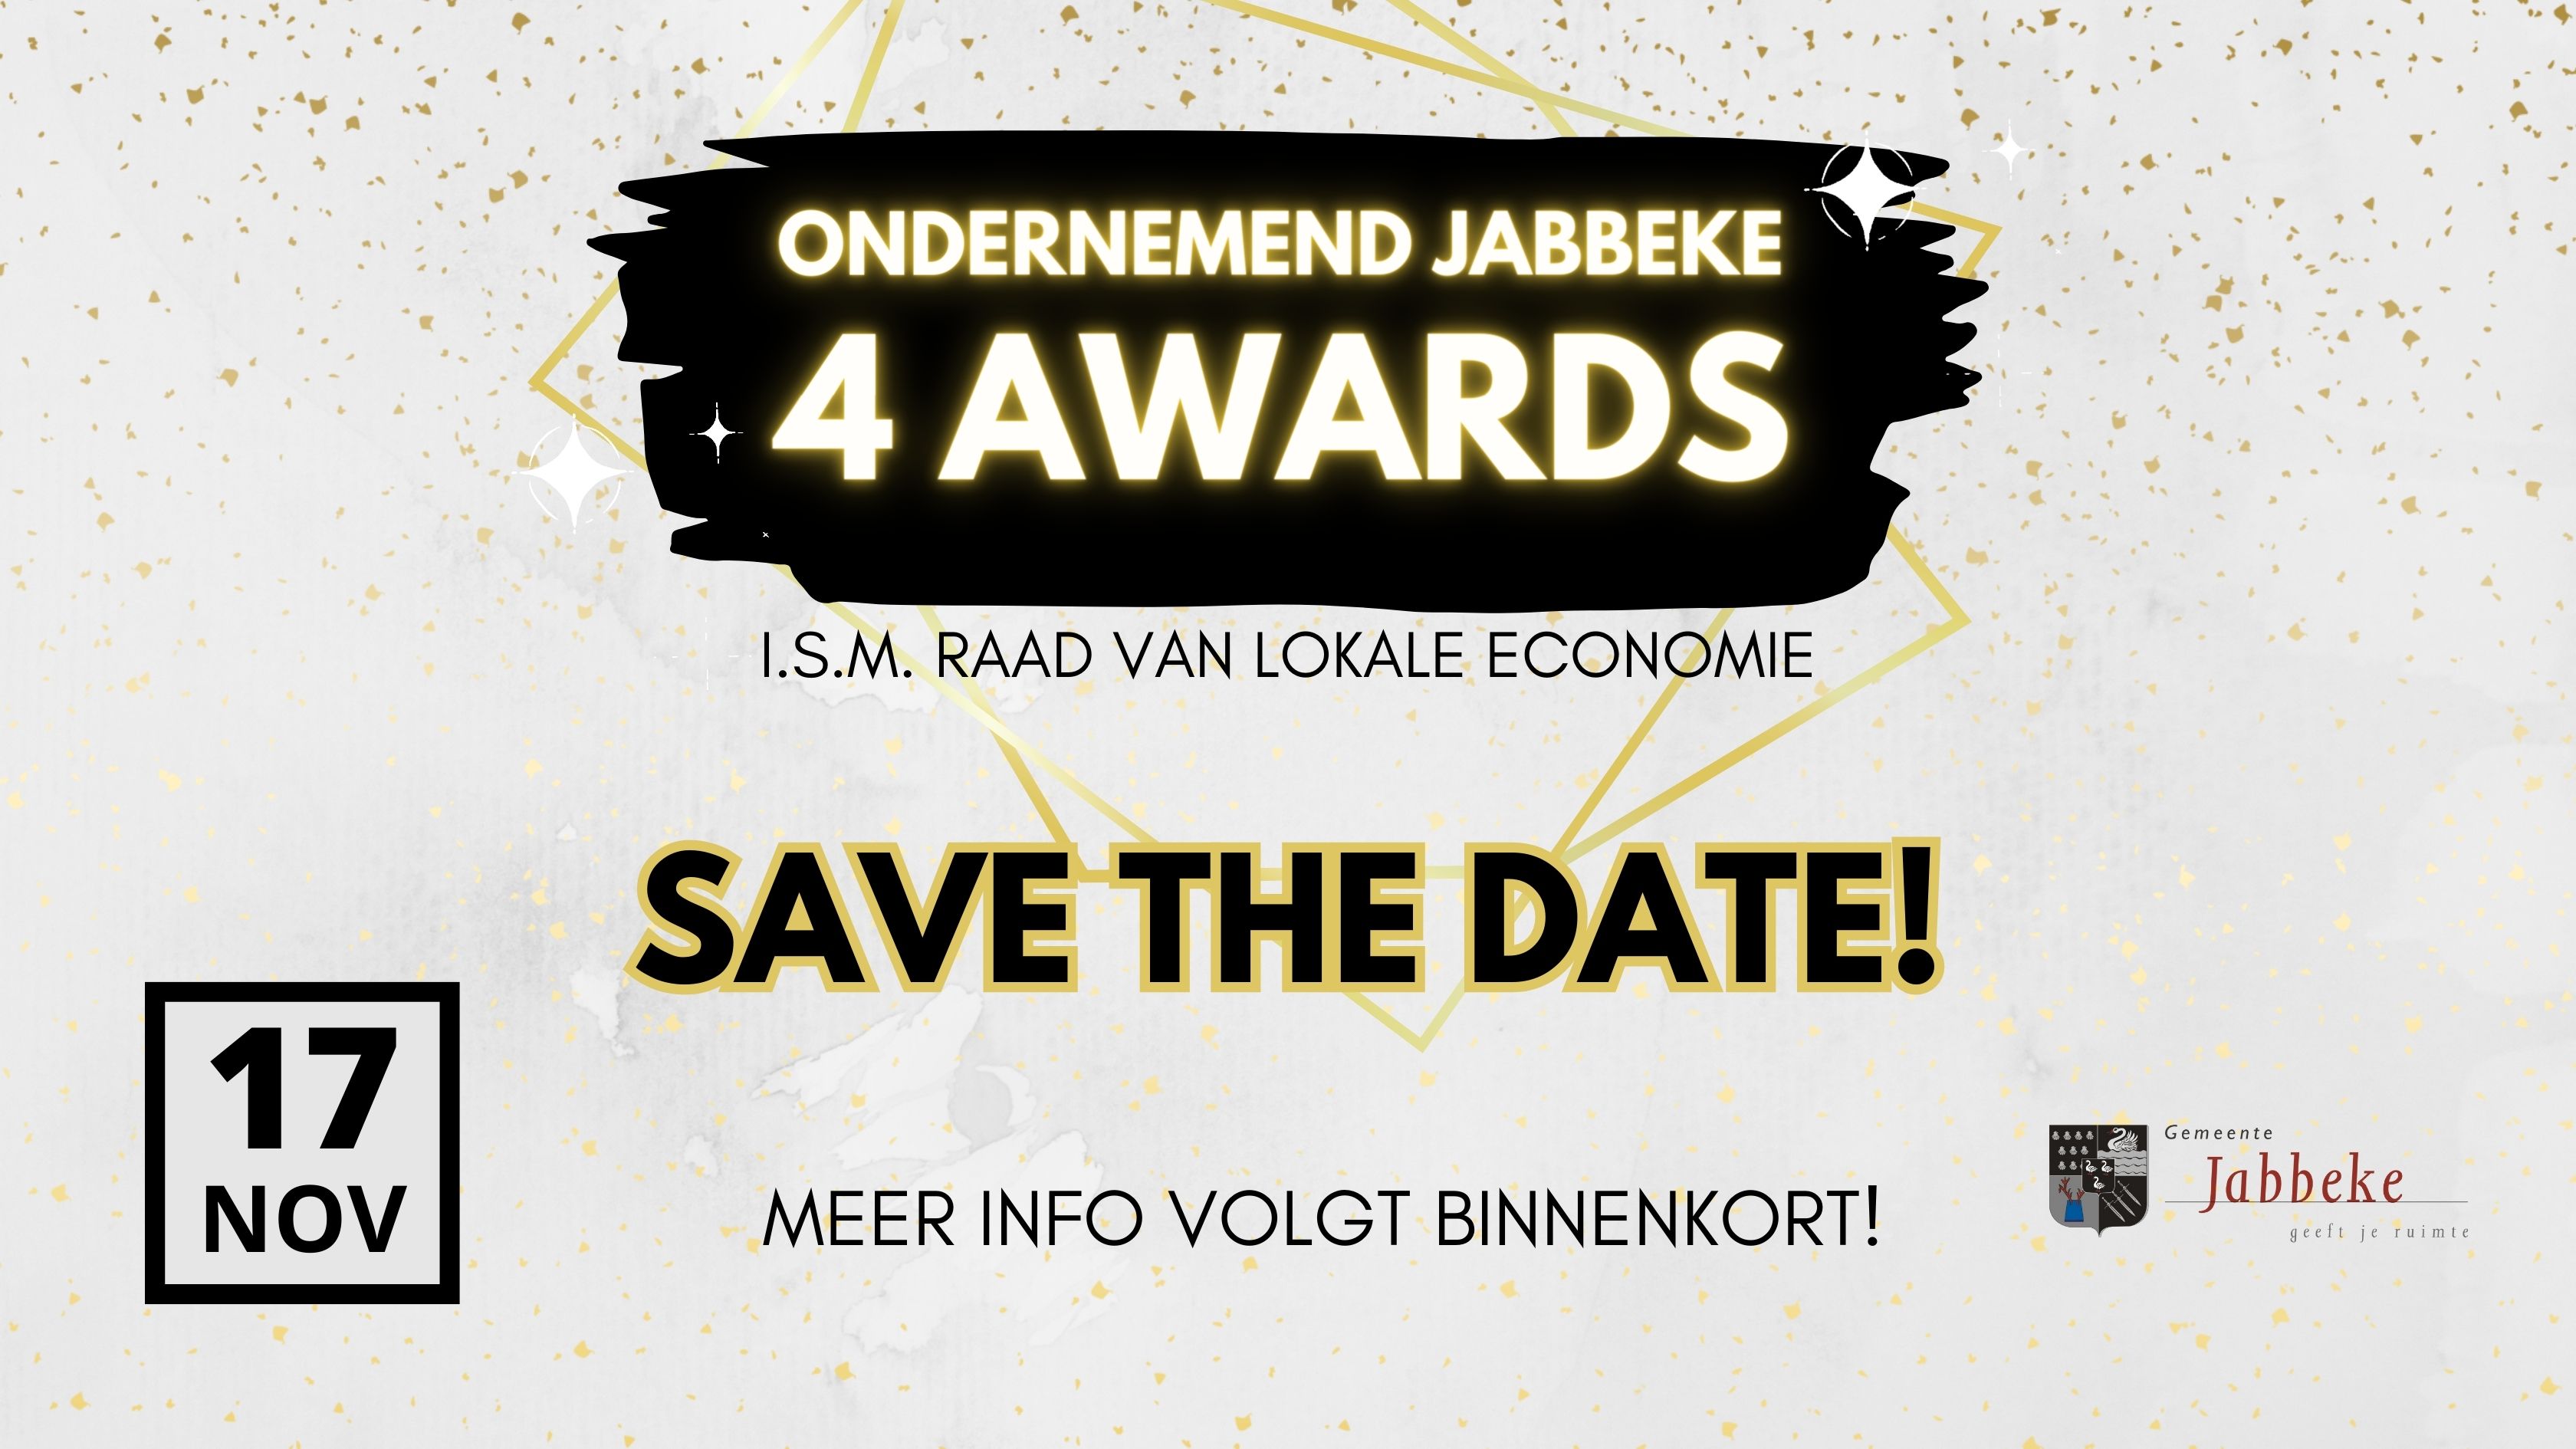 JABBEKE 4 AWARDS: SAVE THE DATE - DAG VAN DE ONDERNEMER